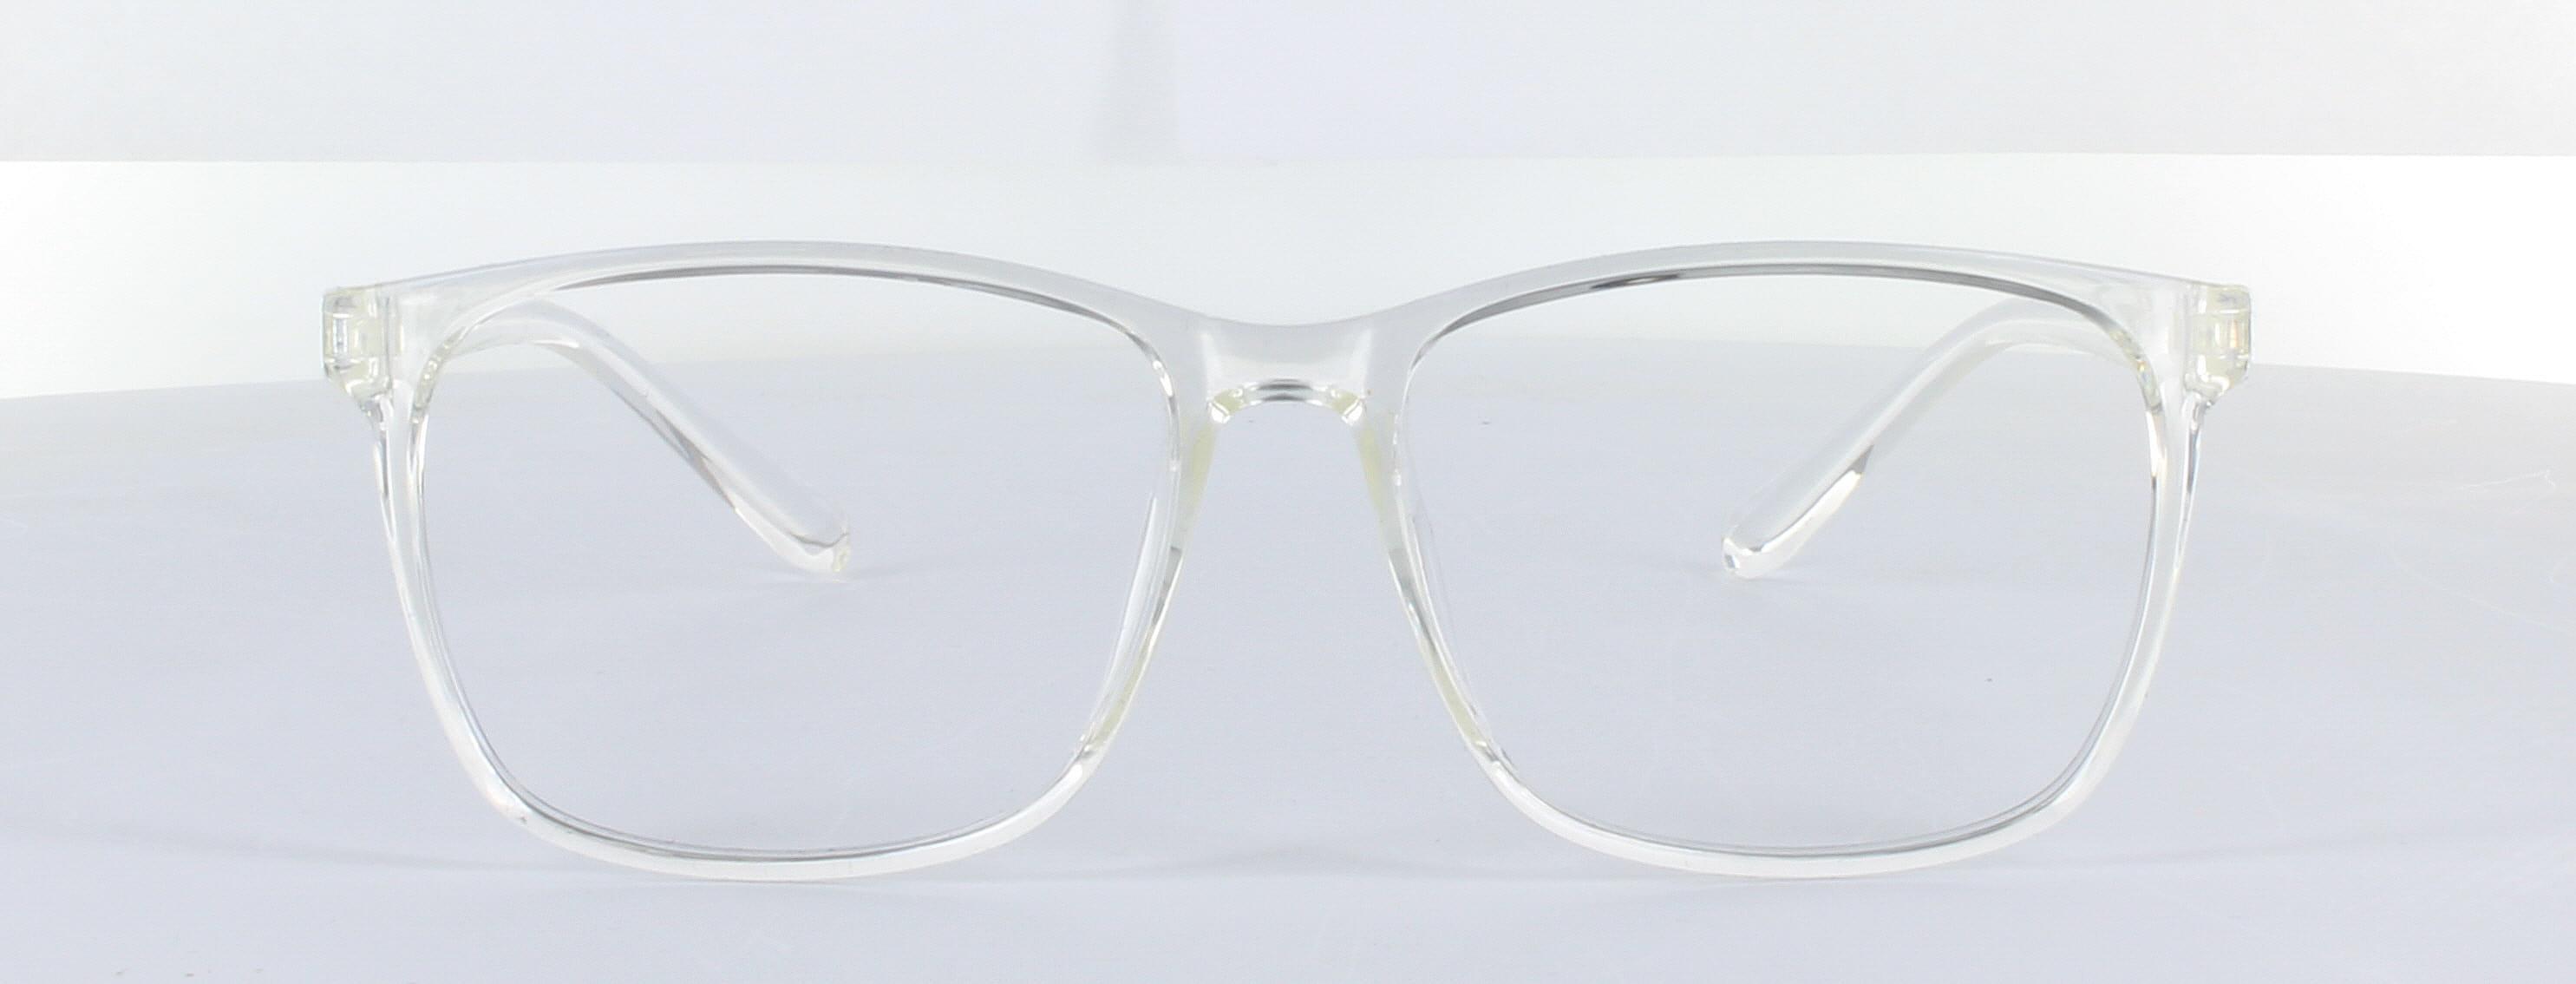 Ocushield Parker Clear Full Rim Anti Blue Light Glasses - Image View 5